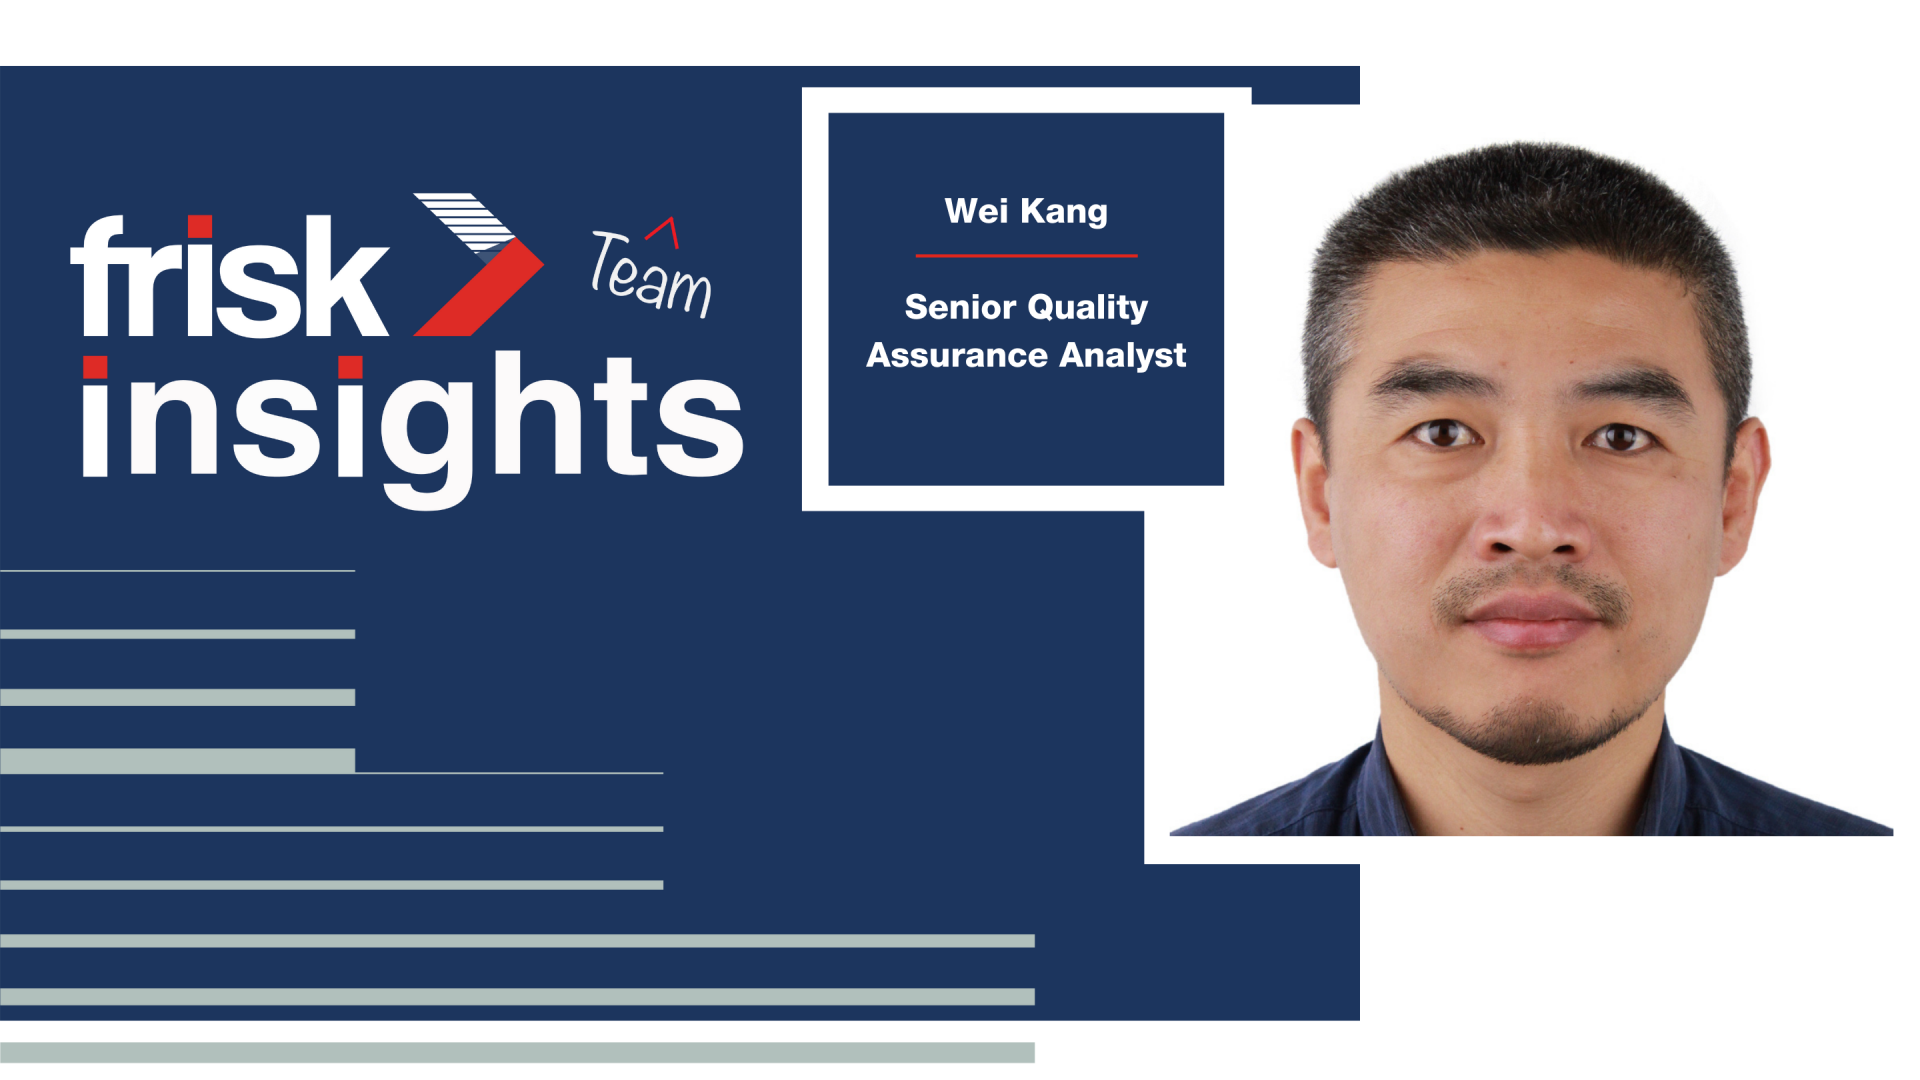 Frisk Team Insights: Wei Kang, Senior Quality Assurance Analyst